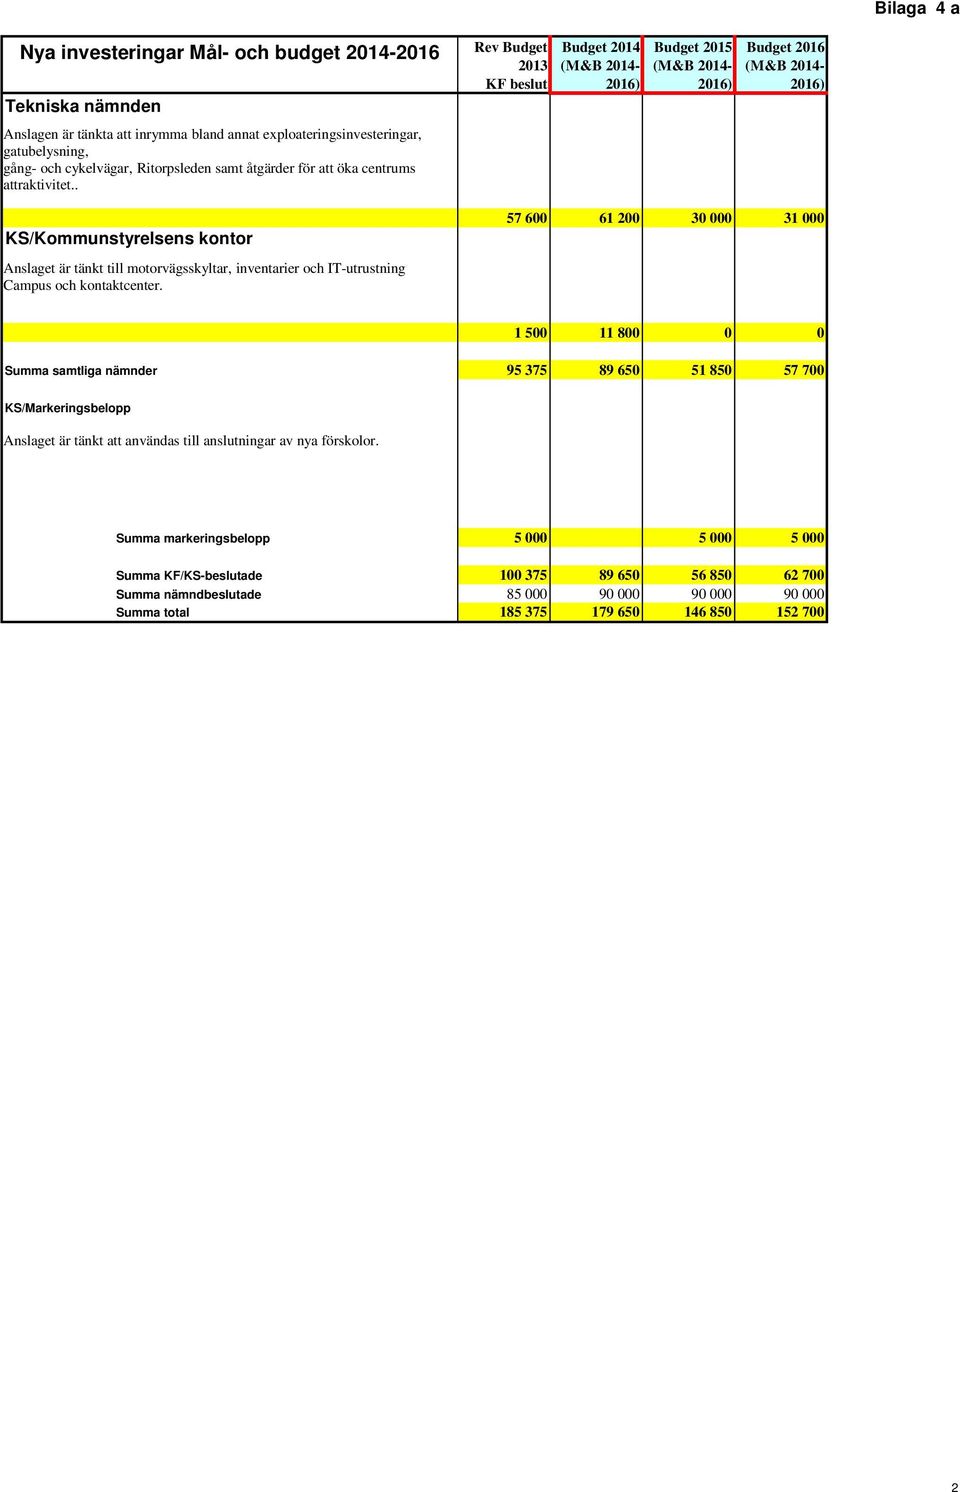 Rev Budget 2013 KF beslut Budget 2014 (M&B 2014-2016) Budget 2015 (M&B 2014-2016) Budget 2016 (M&B 2014-2016) 57 600 61 200 30 000 31 000 1 500 11 800 0 0 Summa samtliga nämnder 95 375 89 650 51 850